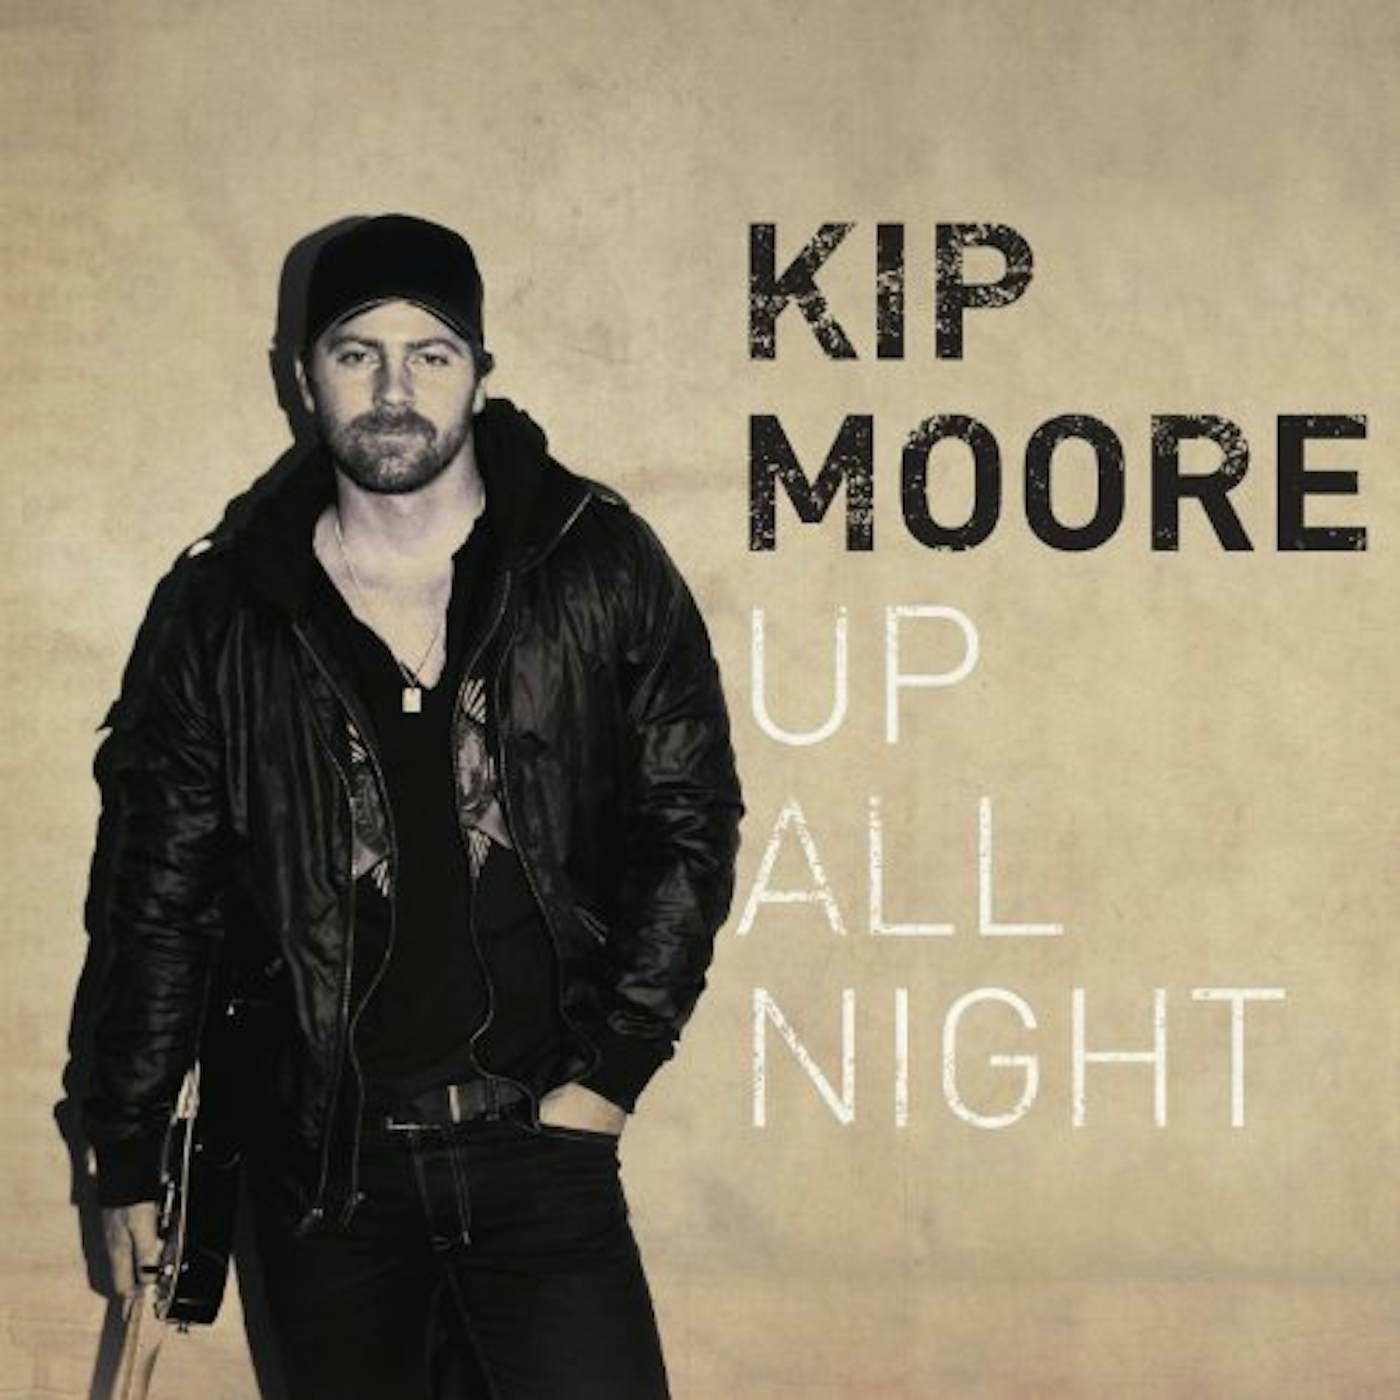 Kip Moore UP ALL NIGHT CD